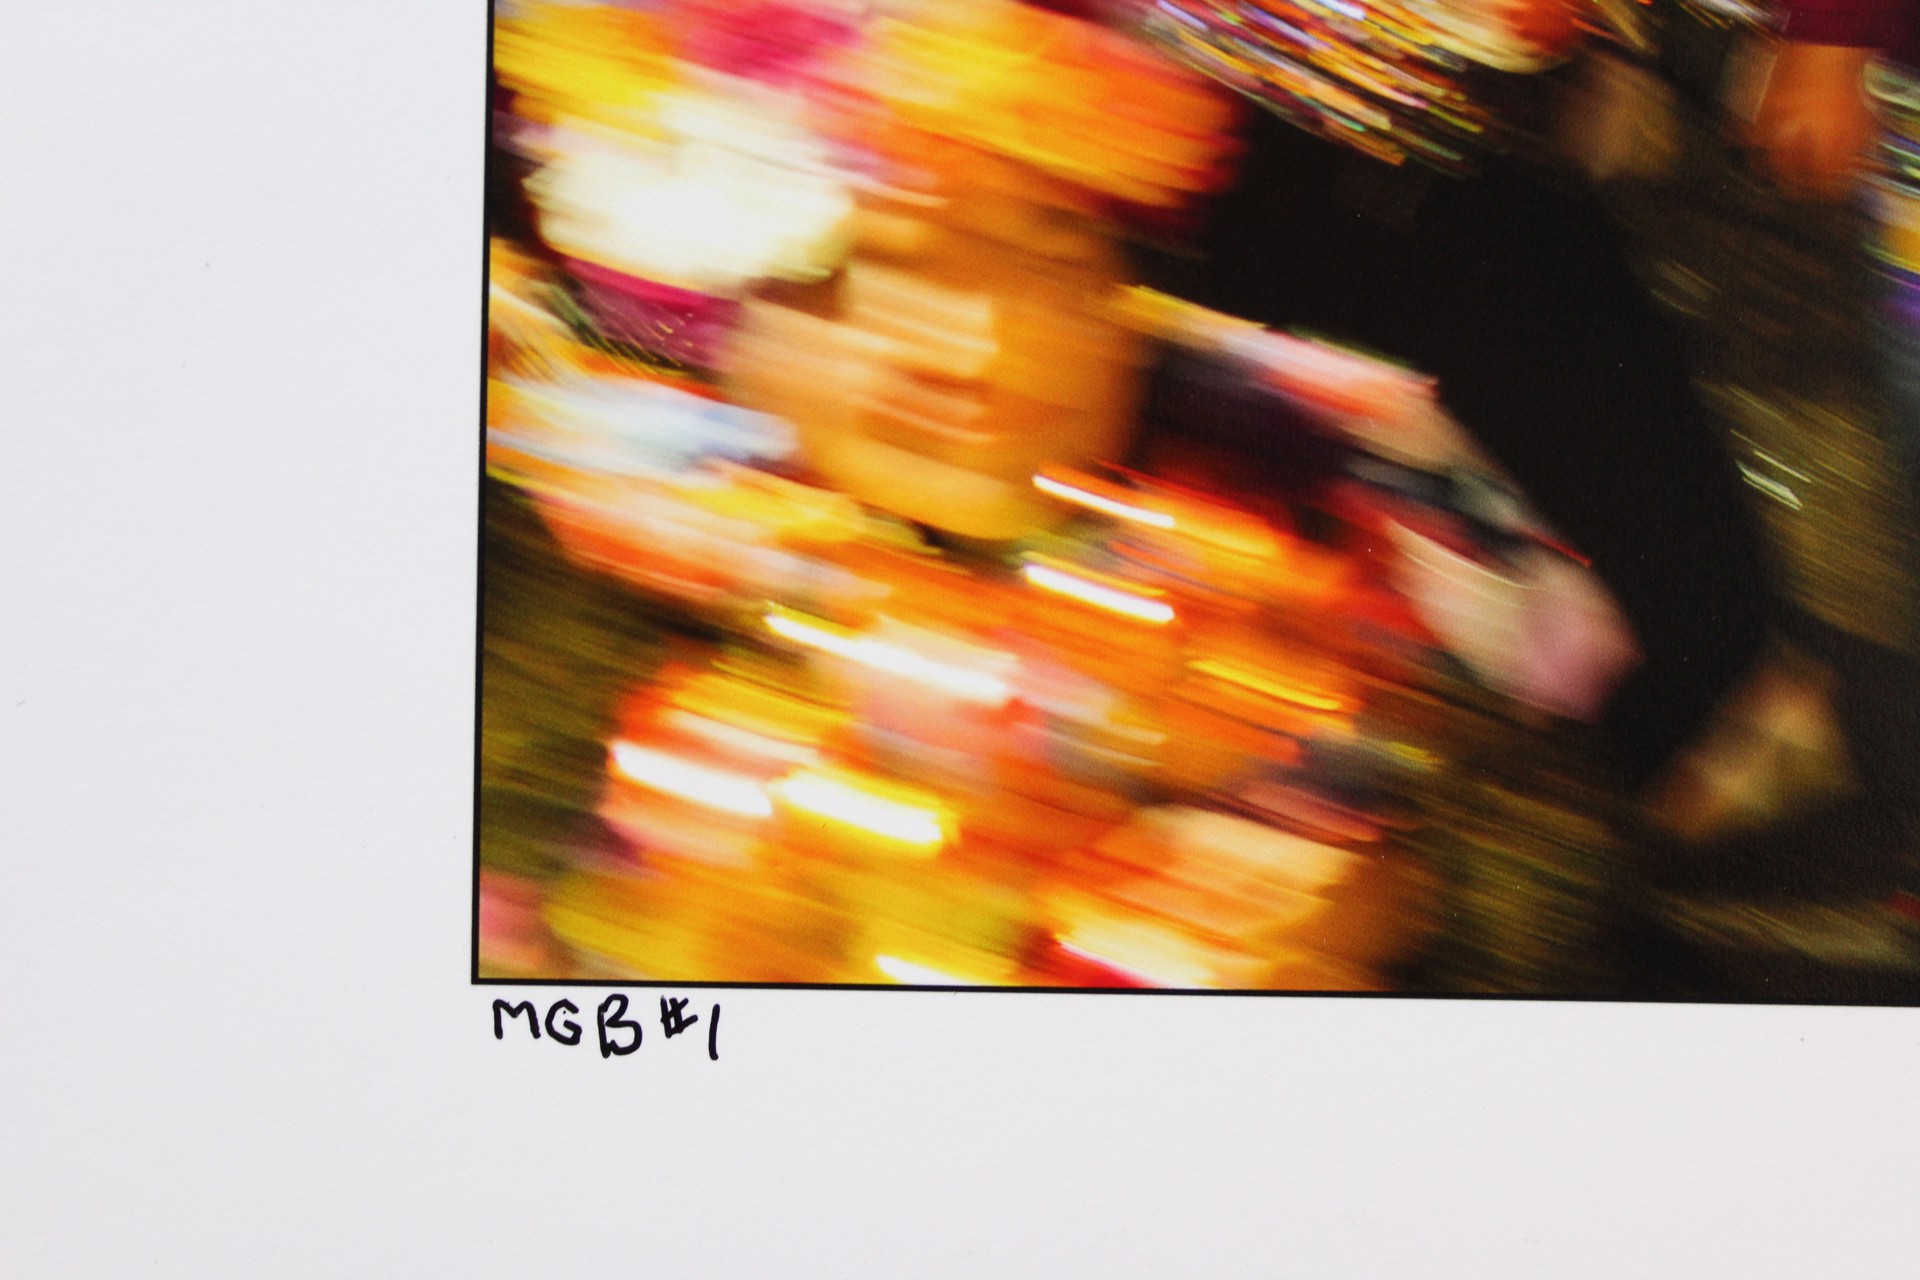 Mardi Gras Blur #1 (open edition) by James Hayman